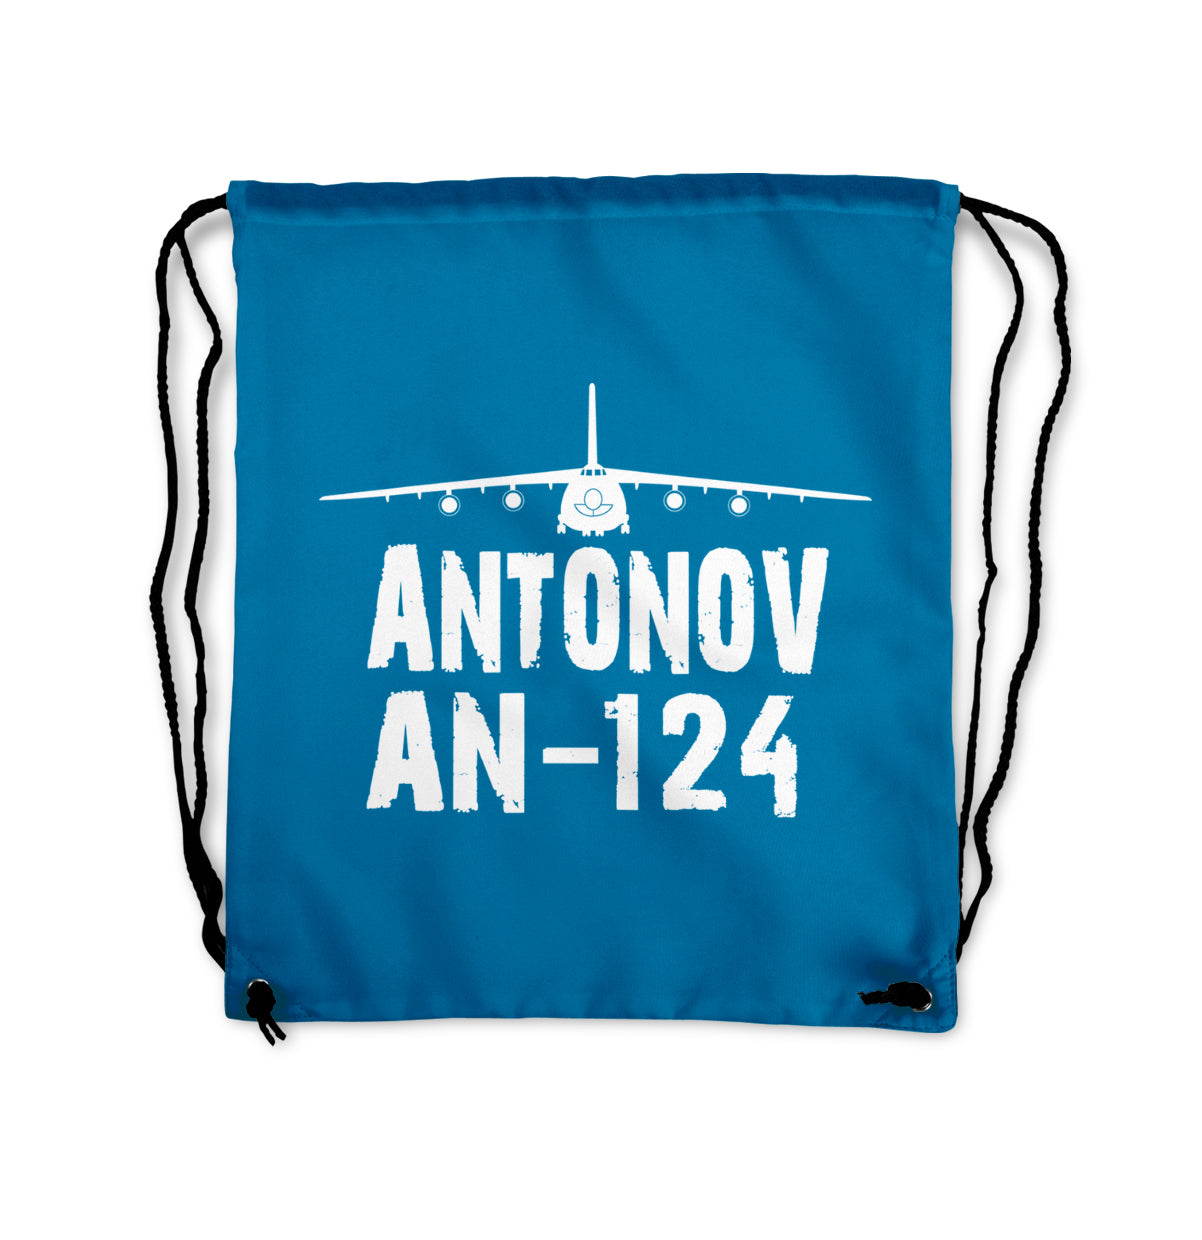 Antonov AN-124 & Plane Designed Drawstring Bags